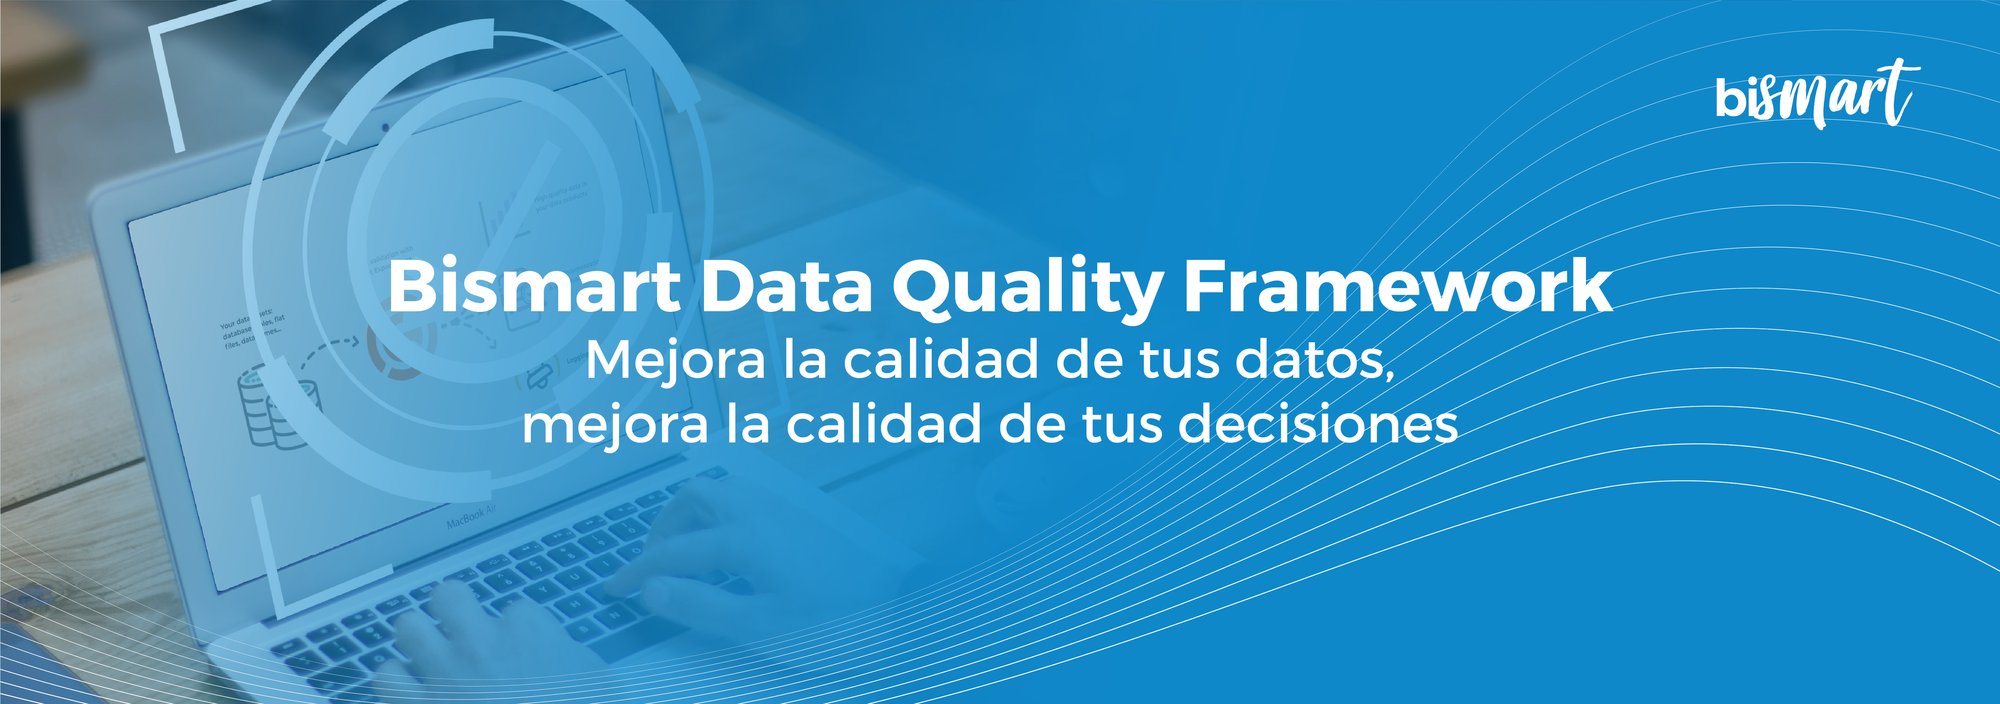 Data Quality Framework_Banner_ES